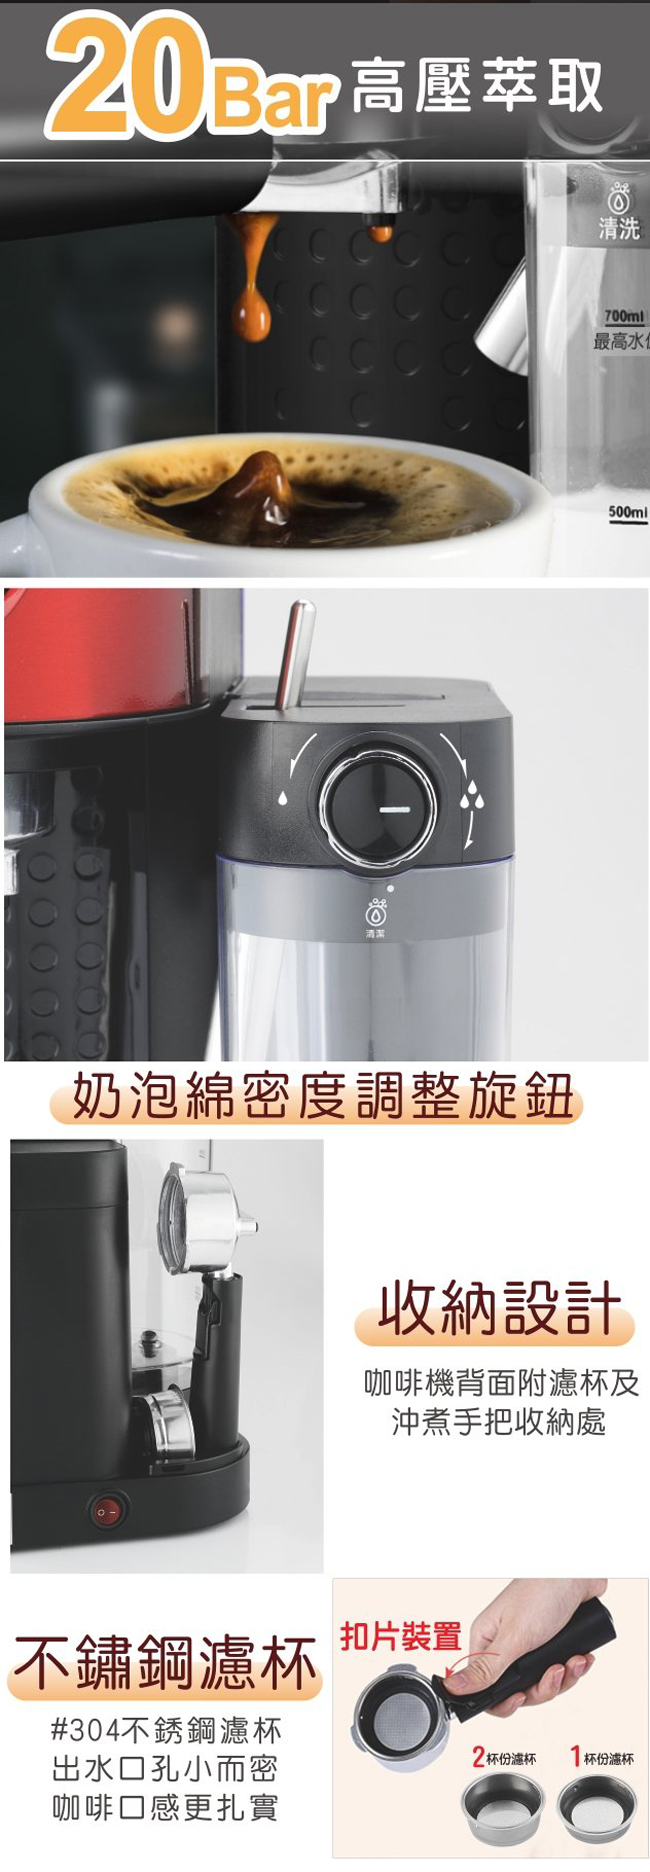 SAMPO 聲寶20Bar義式高壓萃取濃縮奶泡咖啡機(HM-L17201CL)